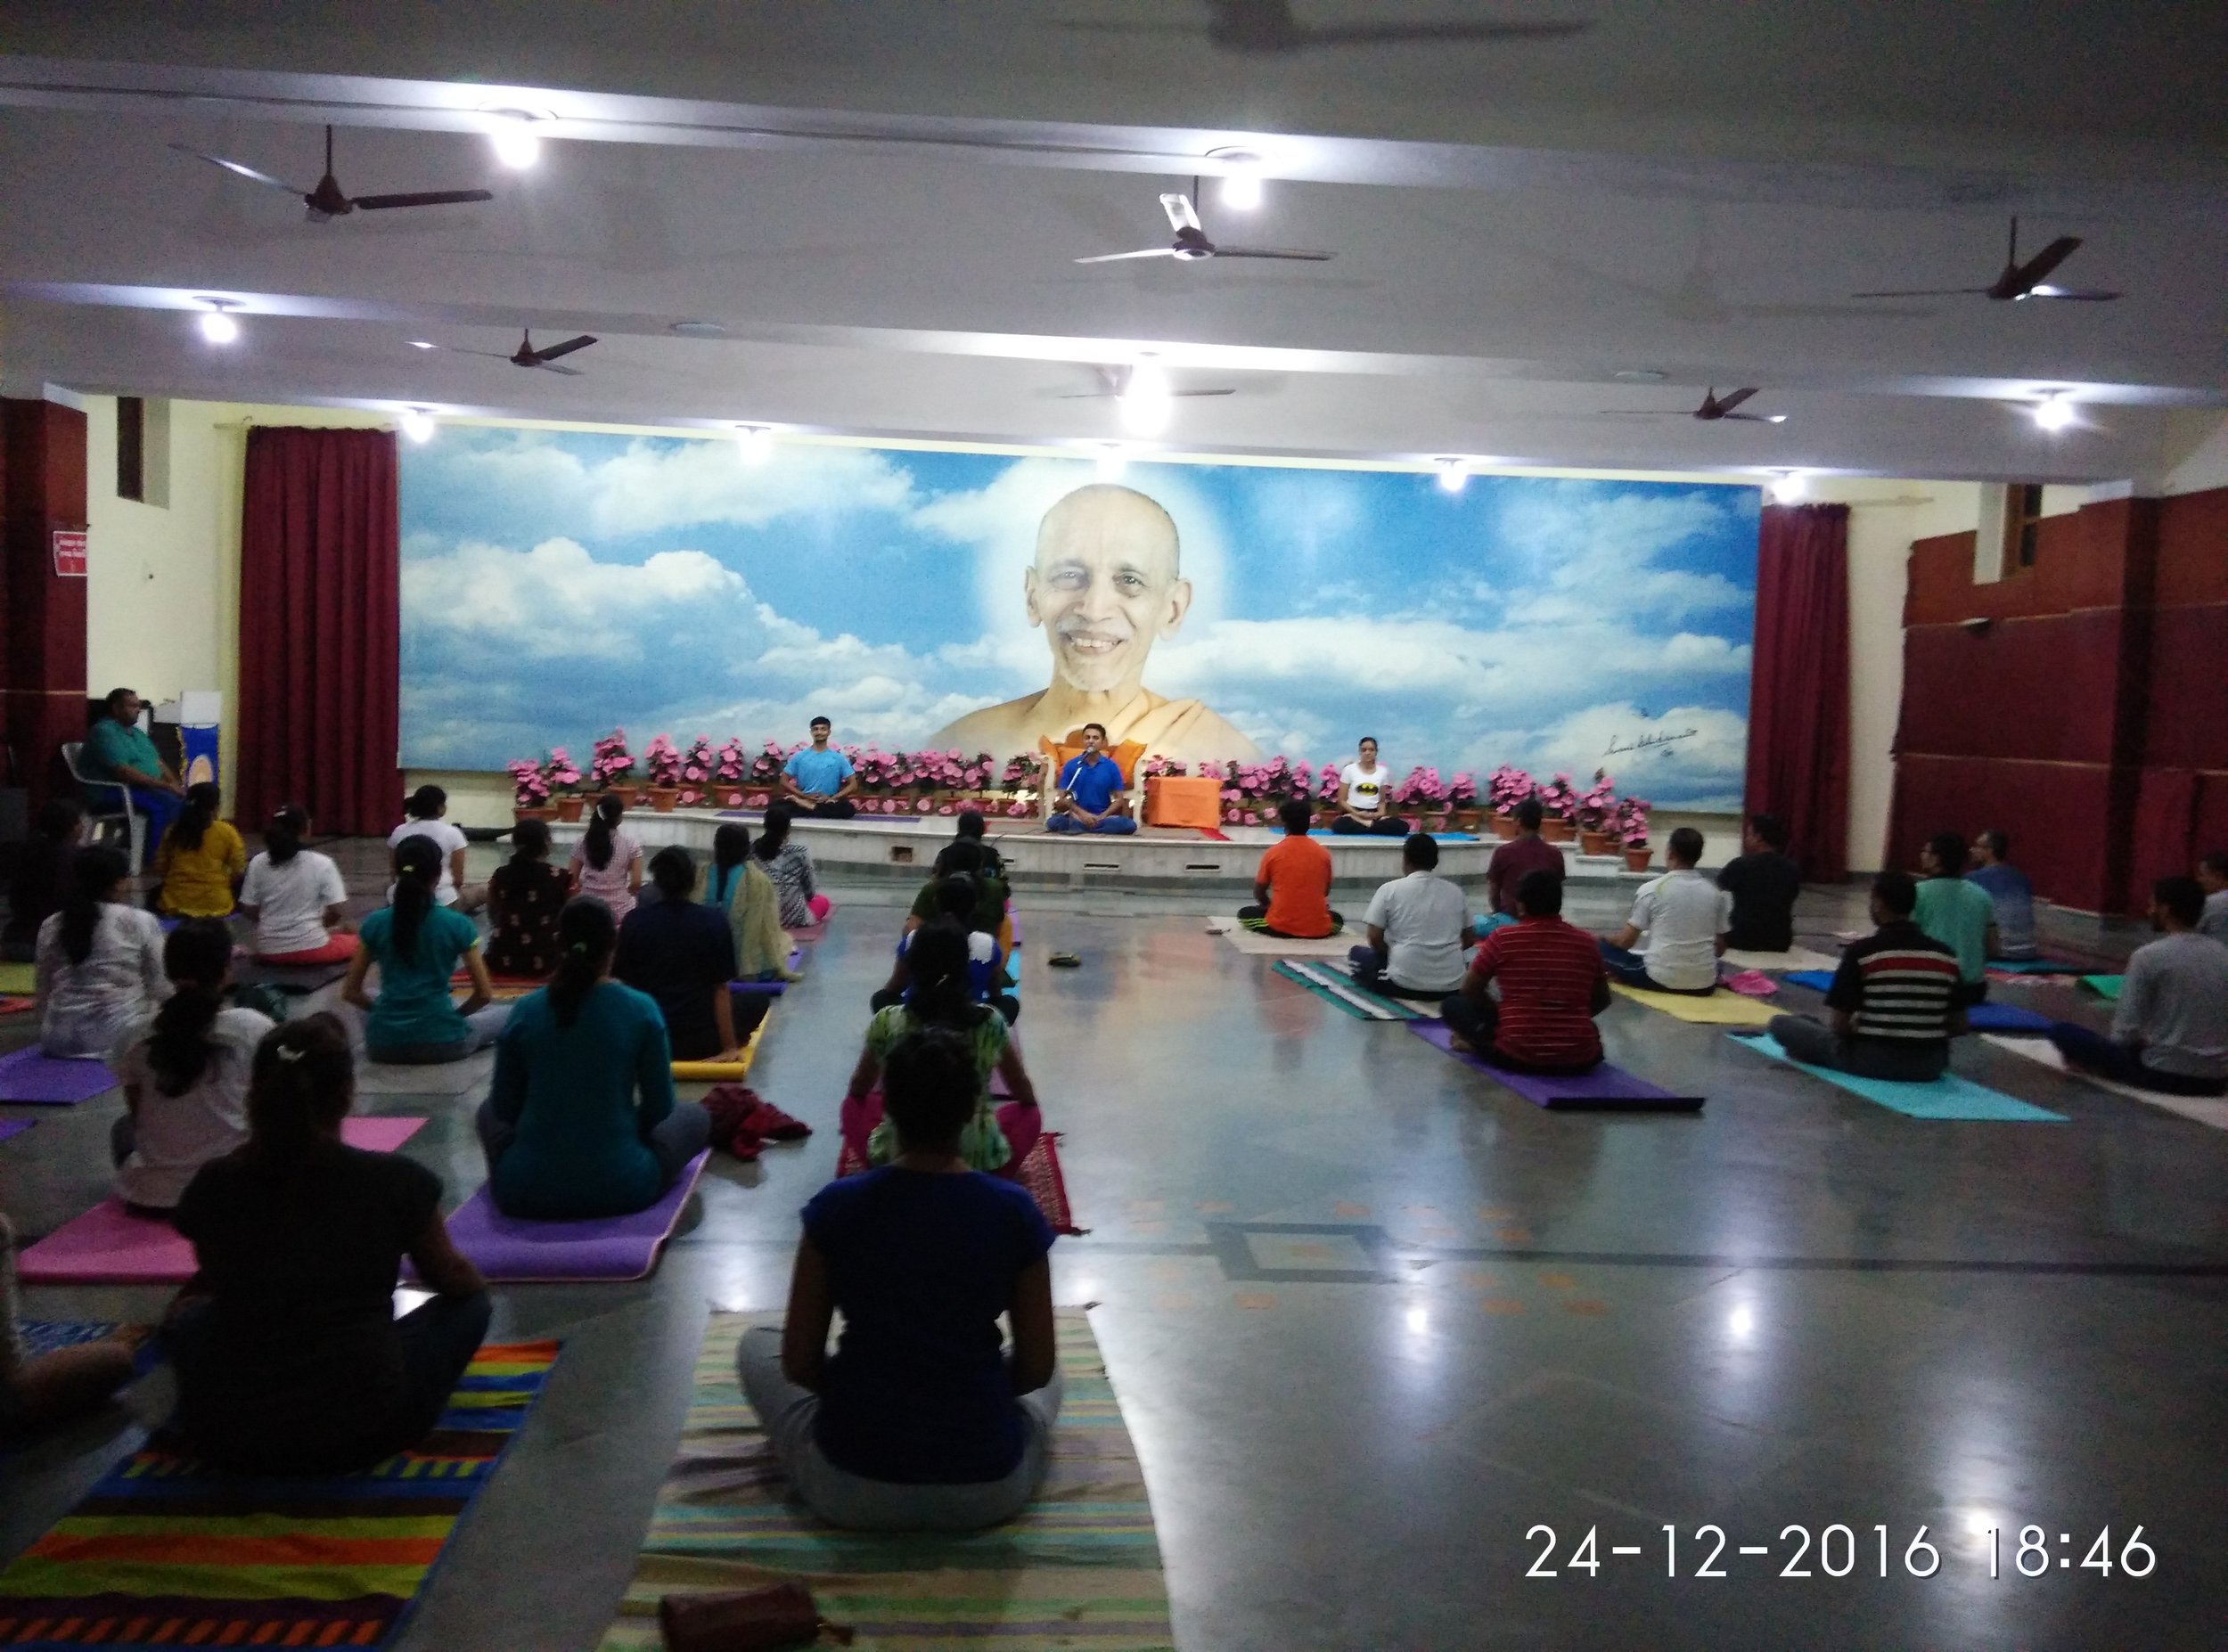 Meditation in Beginners' batch in the feet of H.H. Shri Swami Chidananda, at Dhyan khand, Sivananda Ashram, Dec 2016